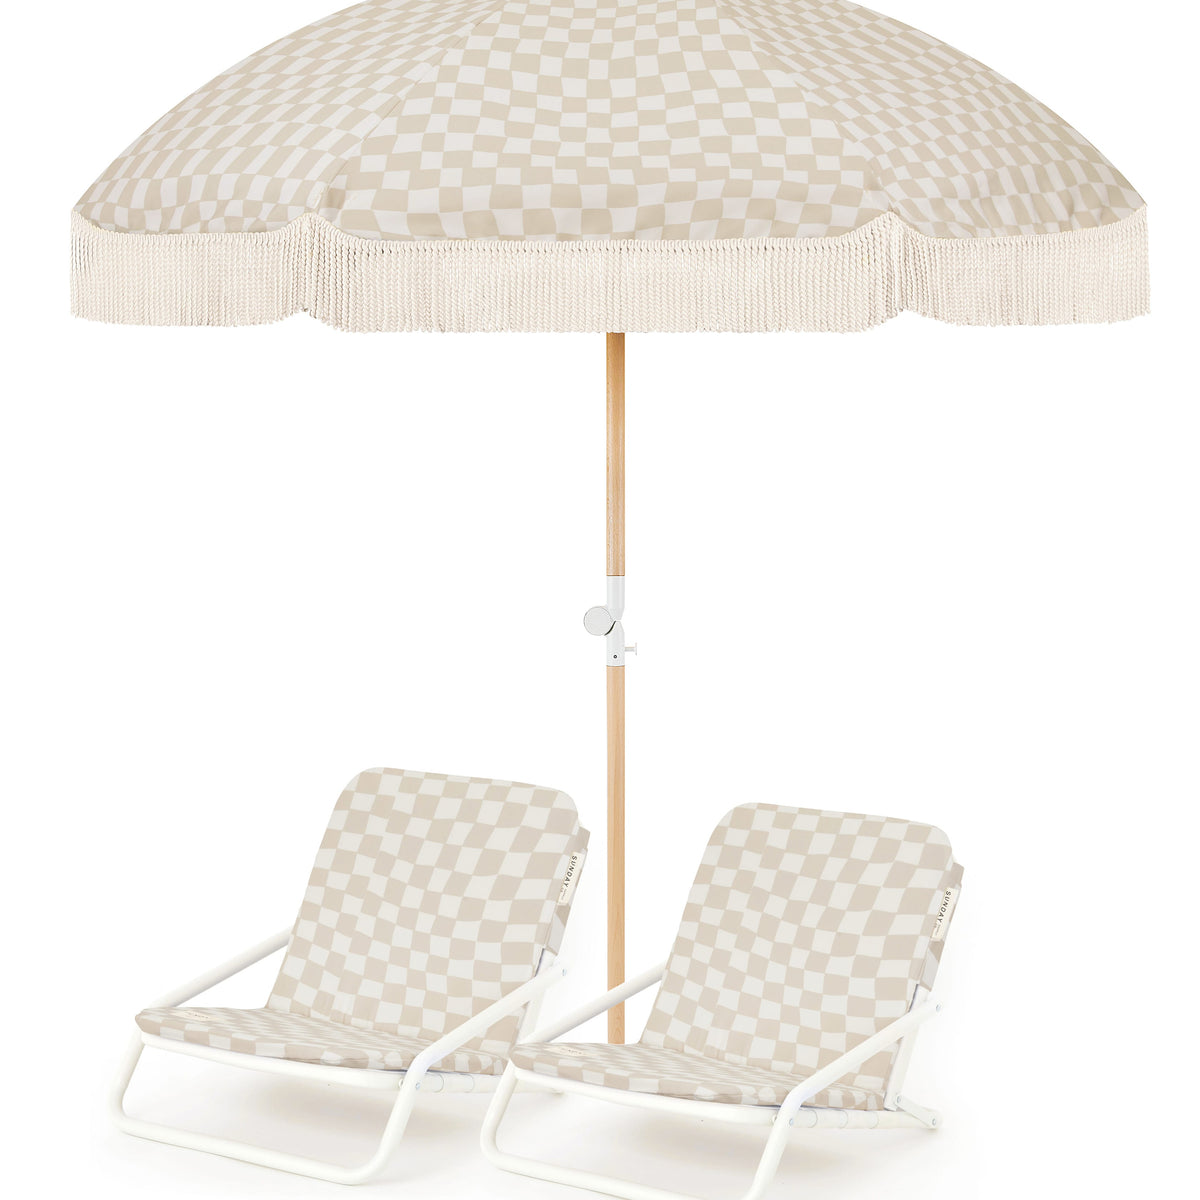 Dunes Oasis Beach Umbrella & Beach Chair Set